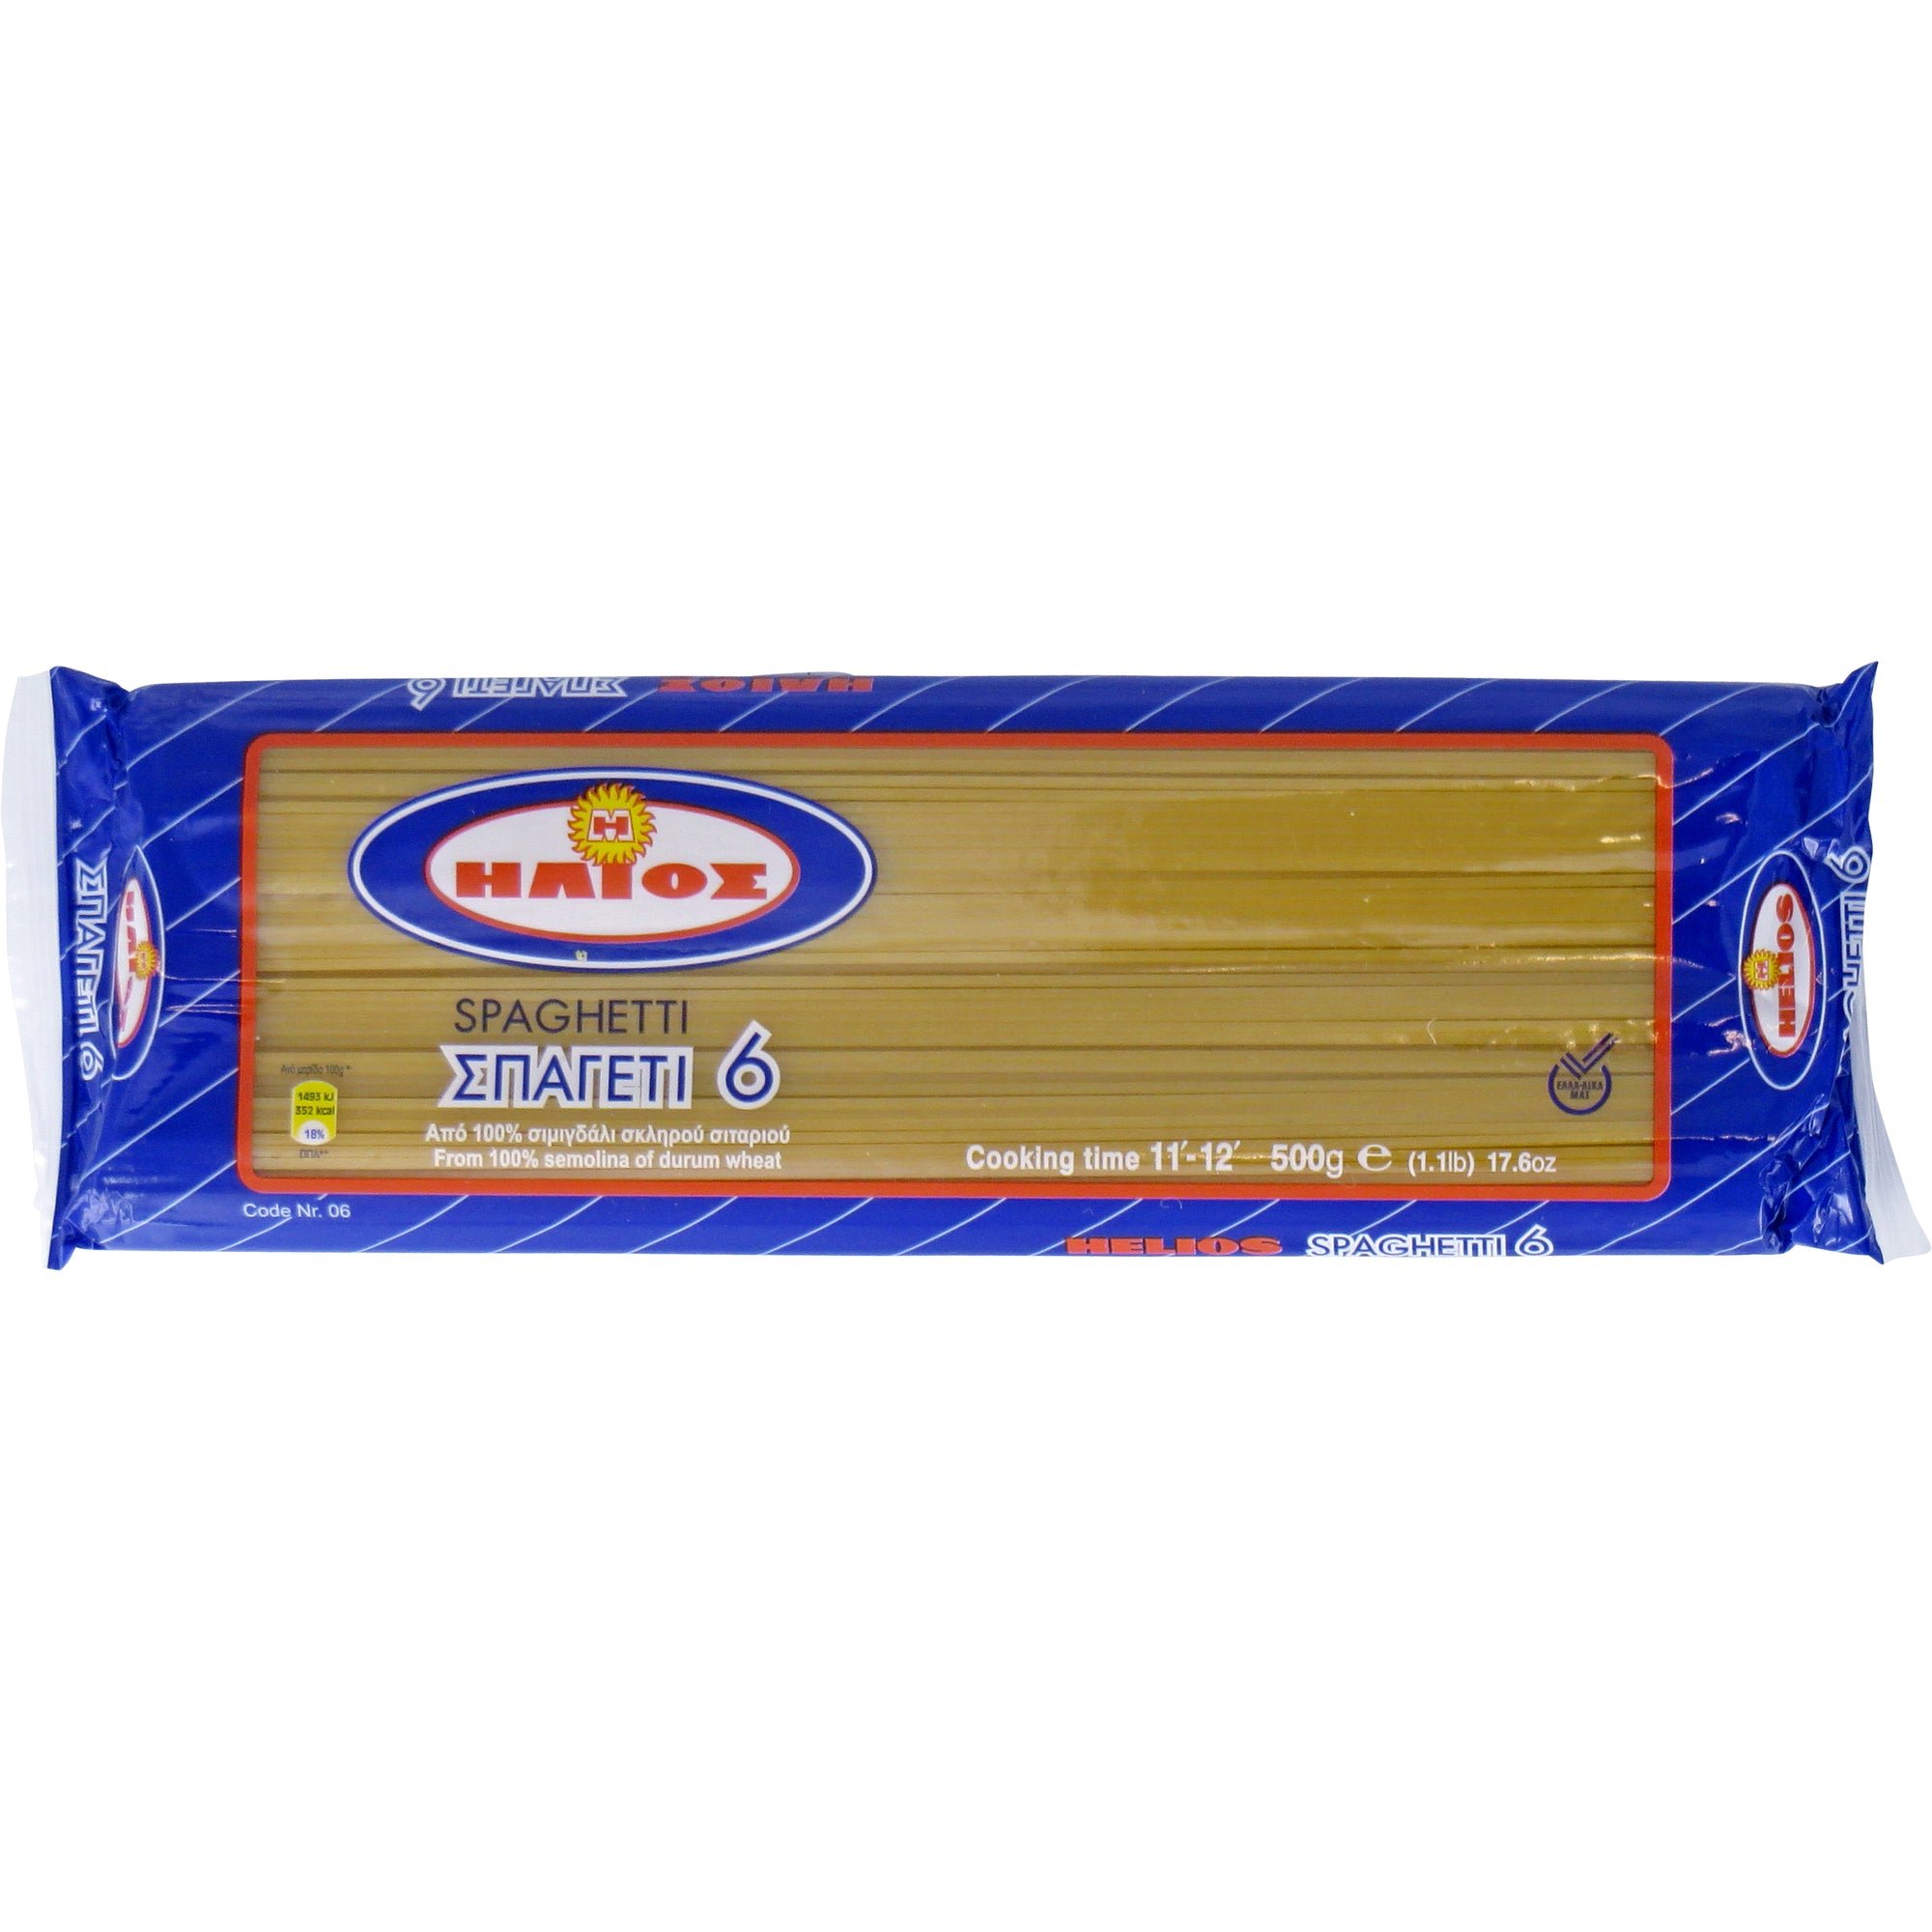 'Helios' Spaghetti #6 500g